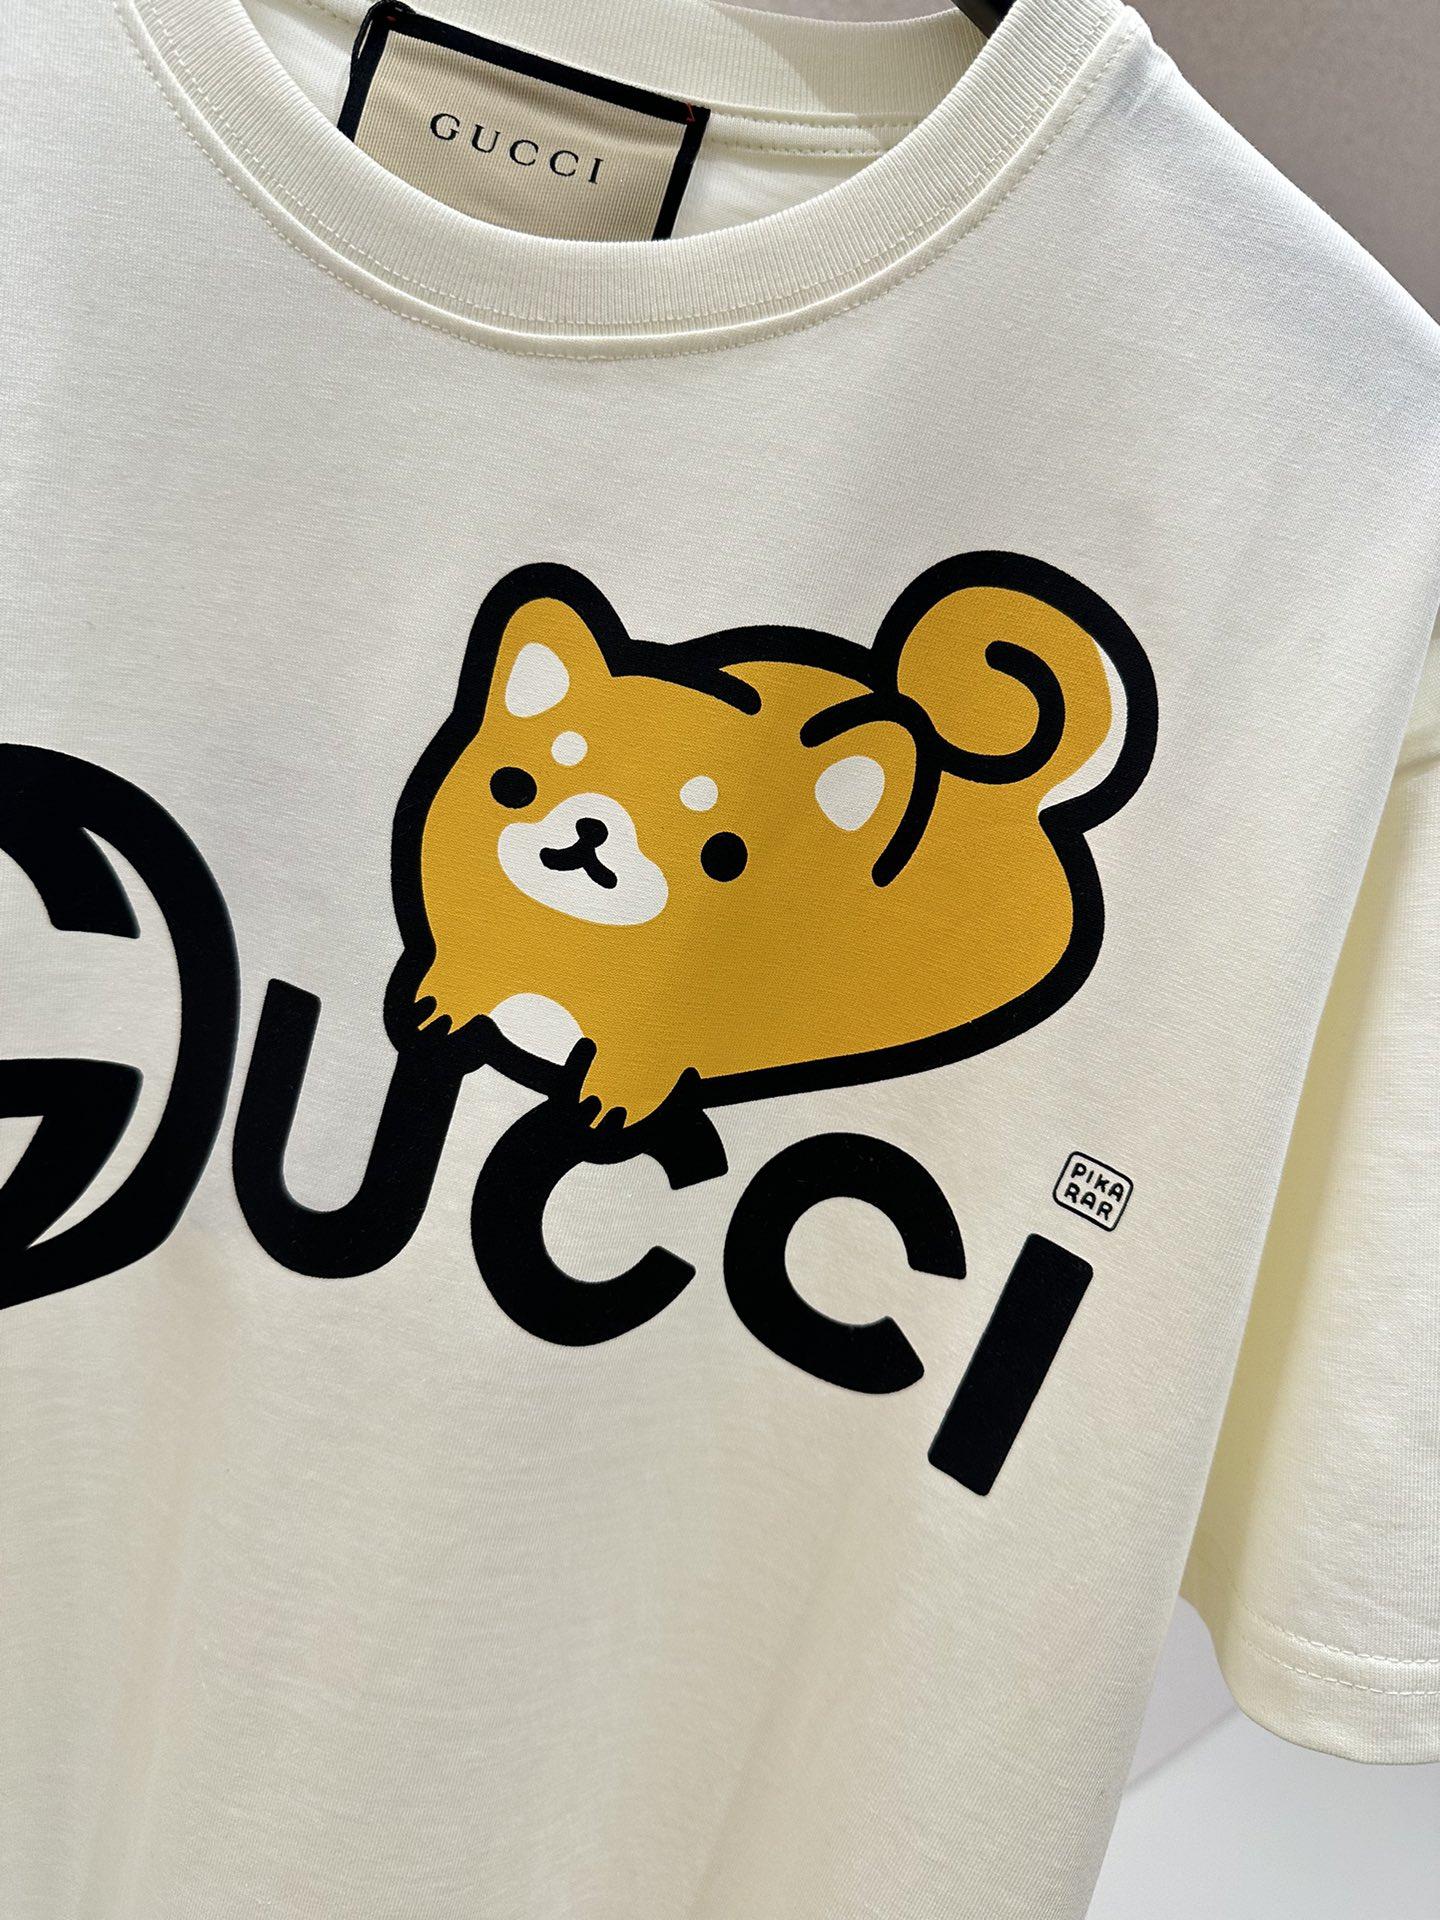 gucci-animal-print-cotton-t-shirt-7220_16845021126-1000